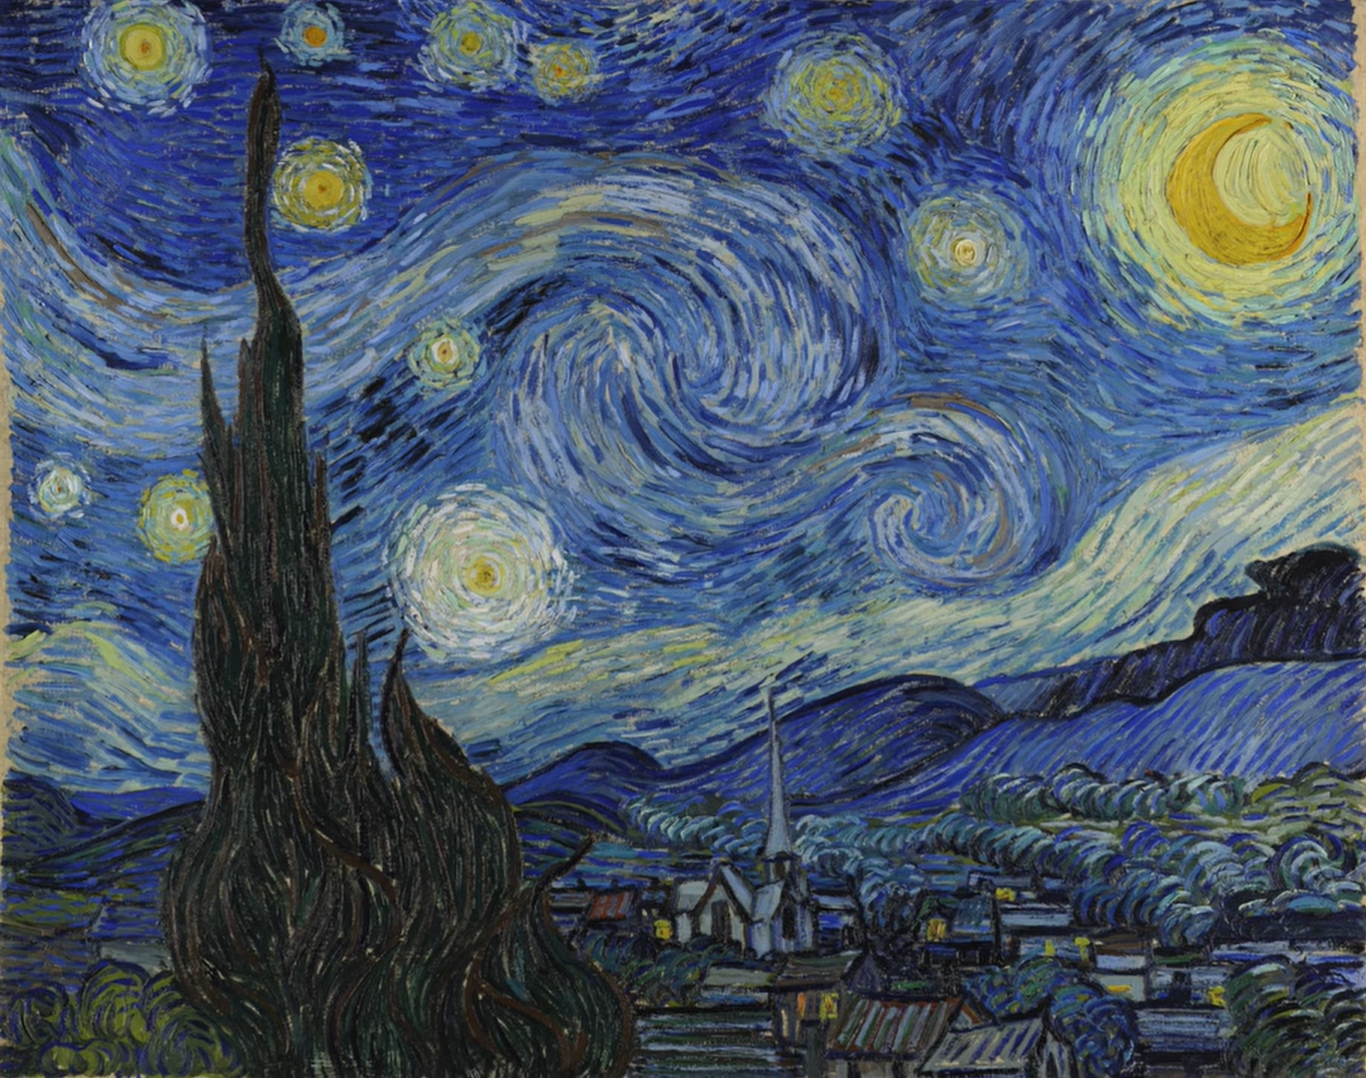 Vincent Van Gogh's The Starry Night